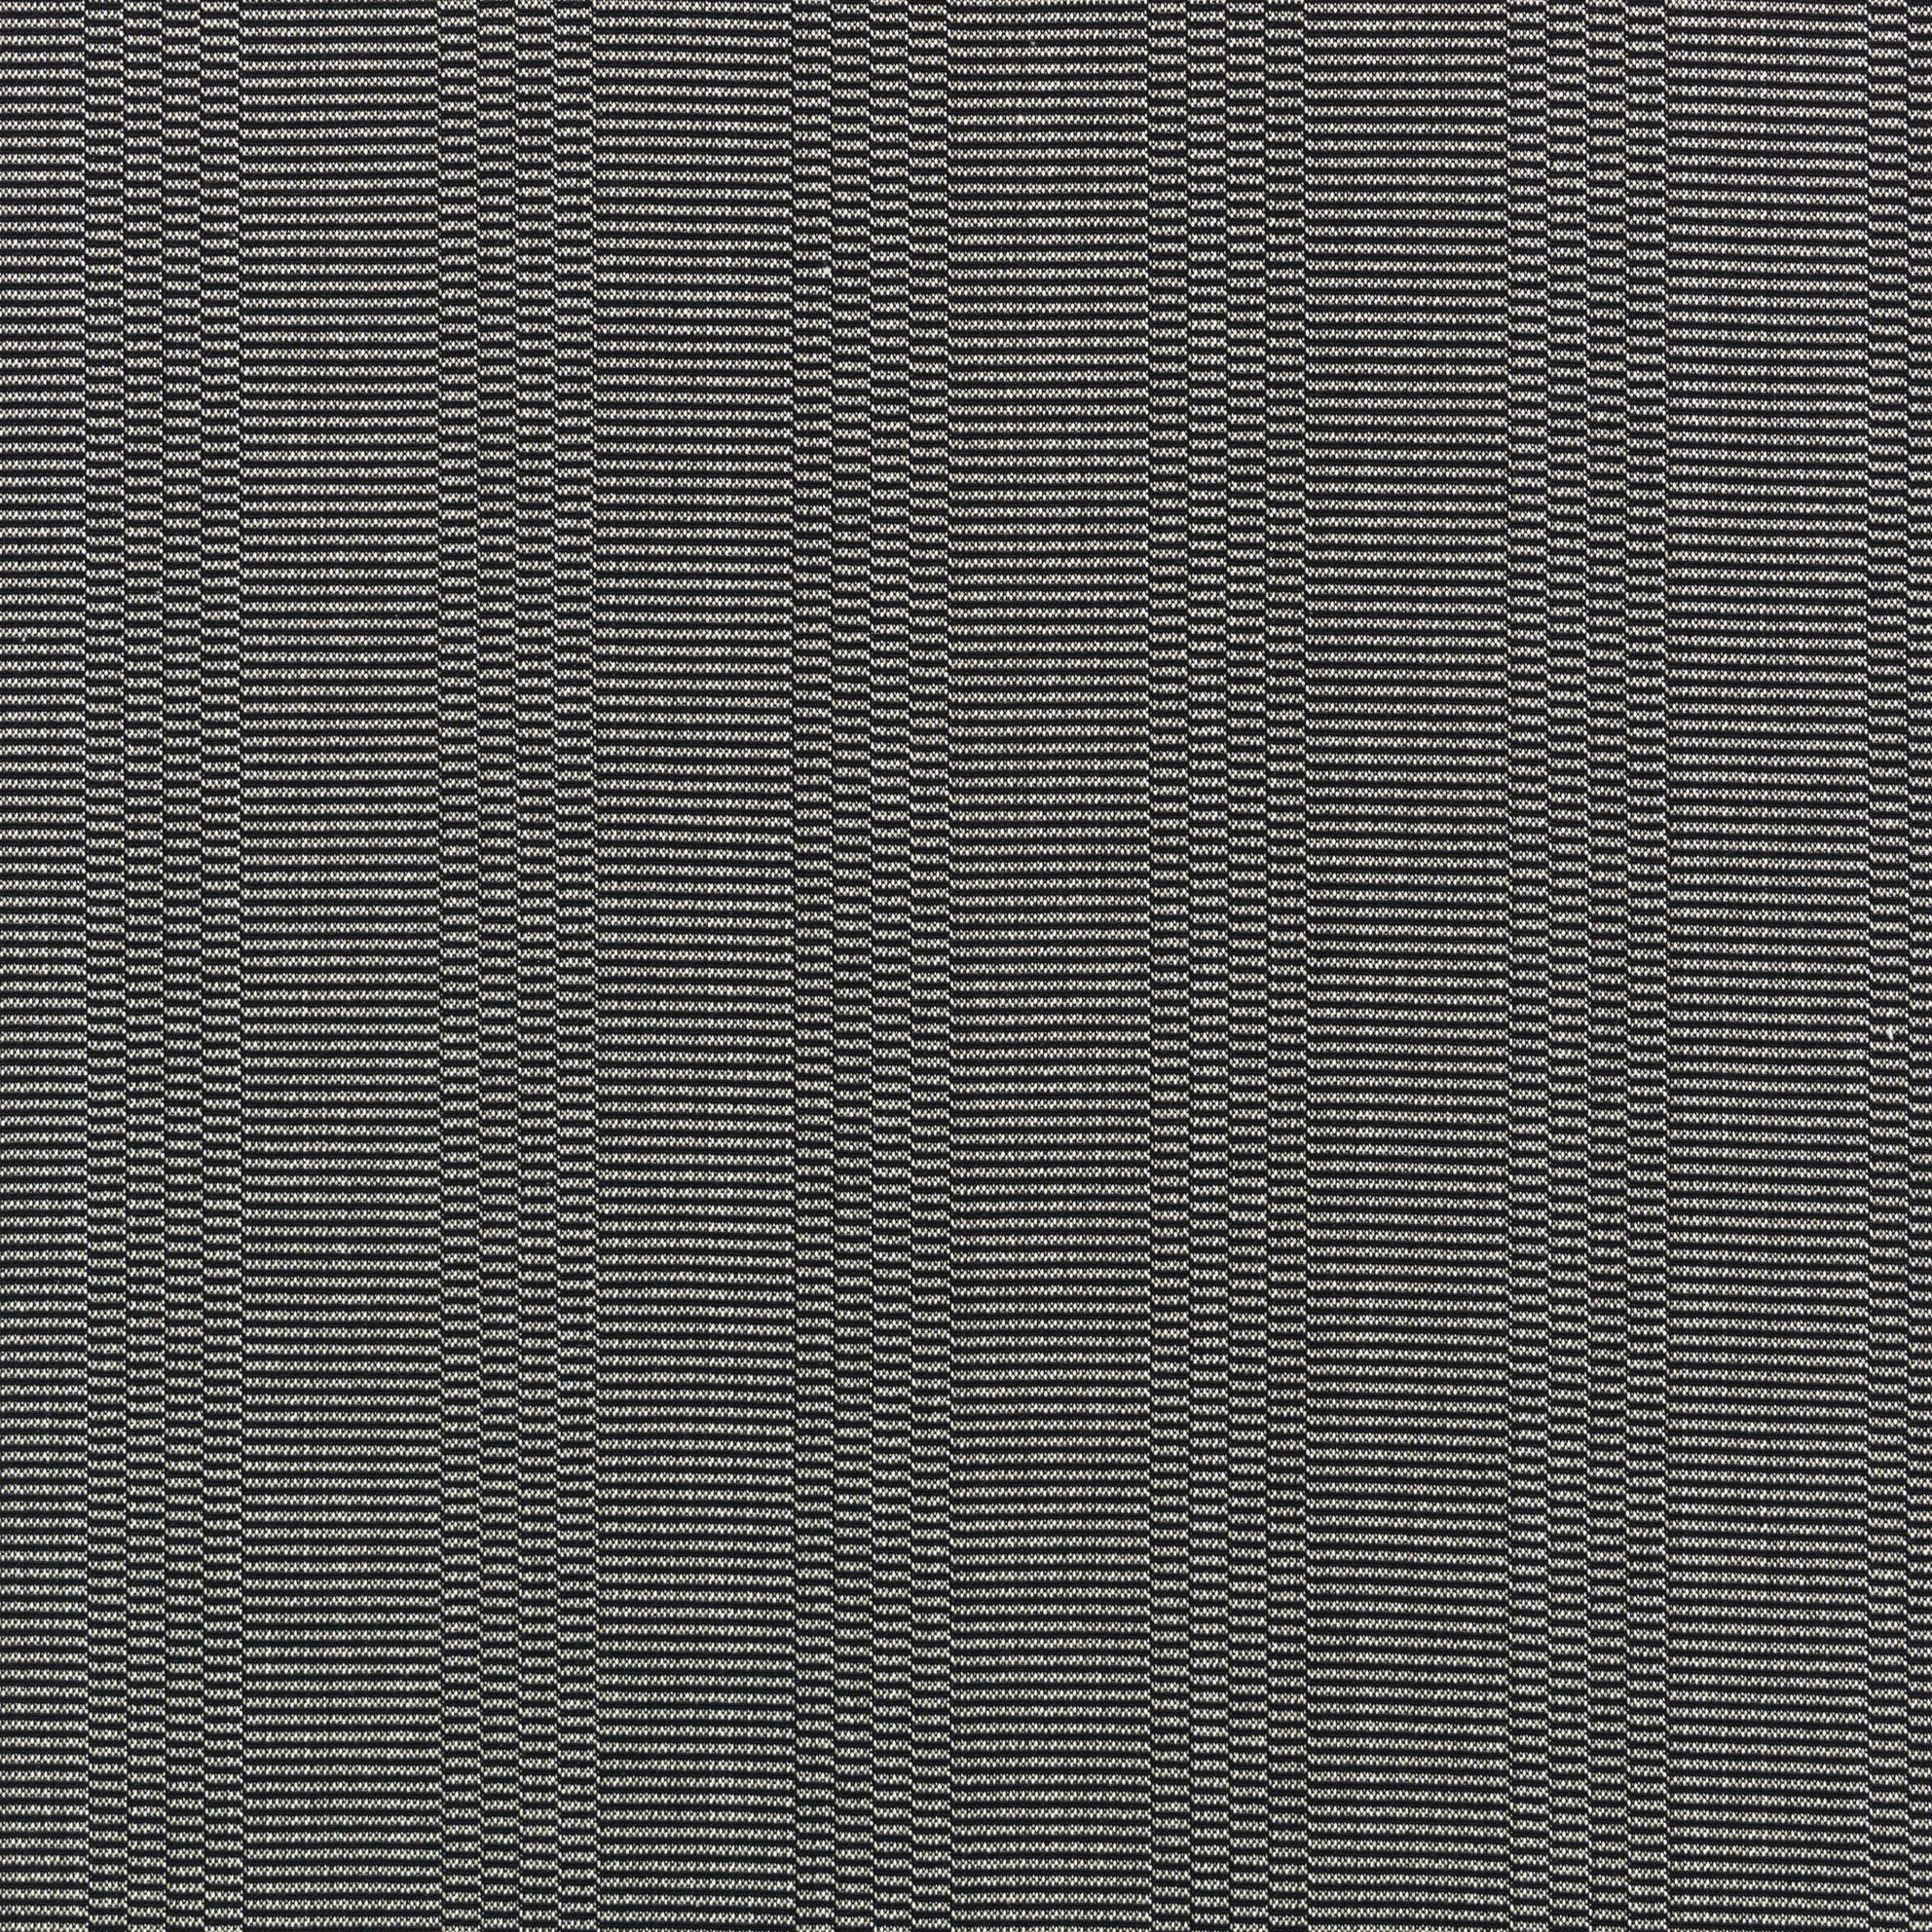 Eos Cotton Fabric - Black | Nicholas Engert Interiors